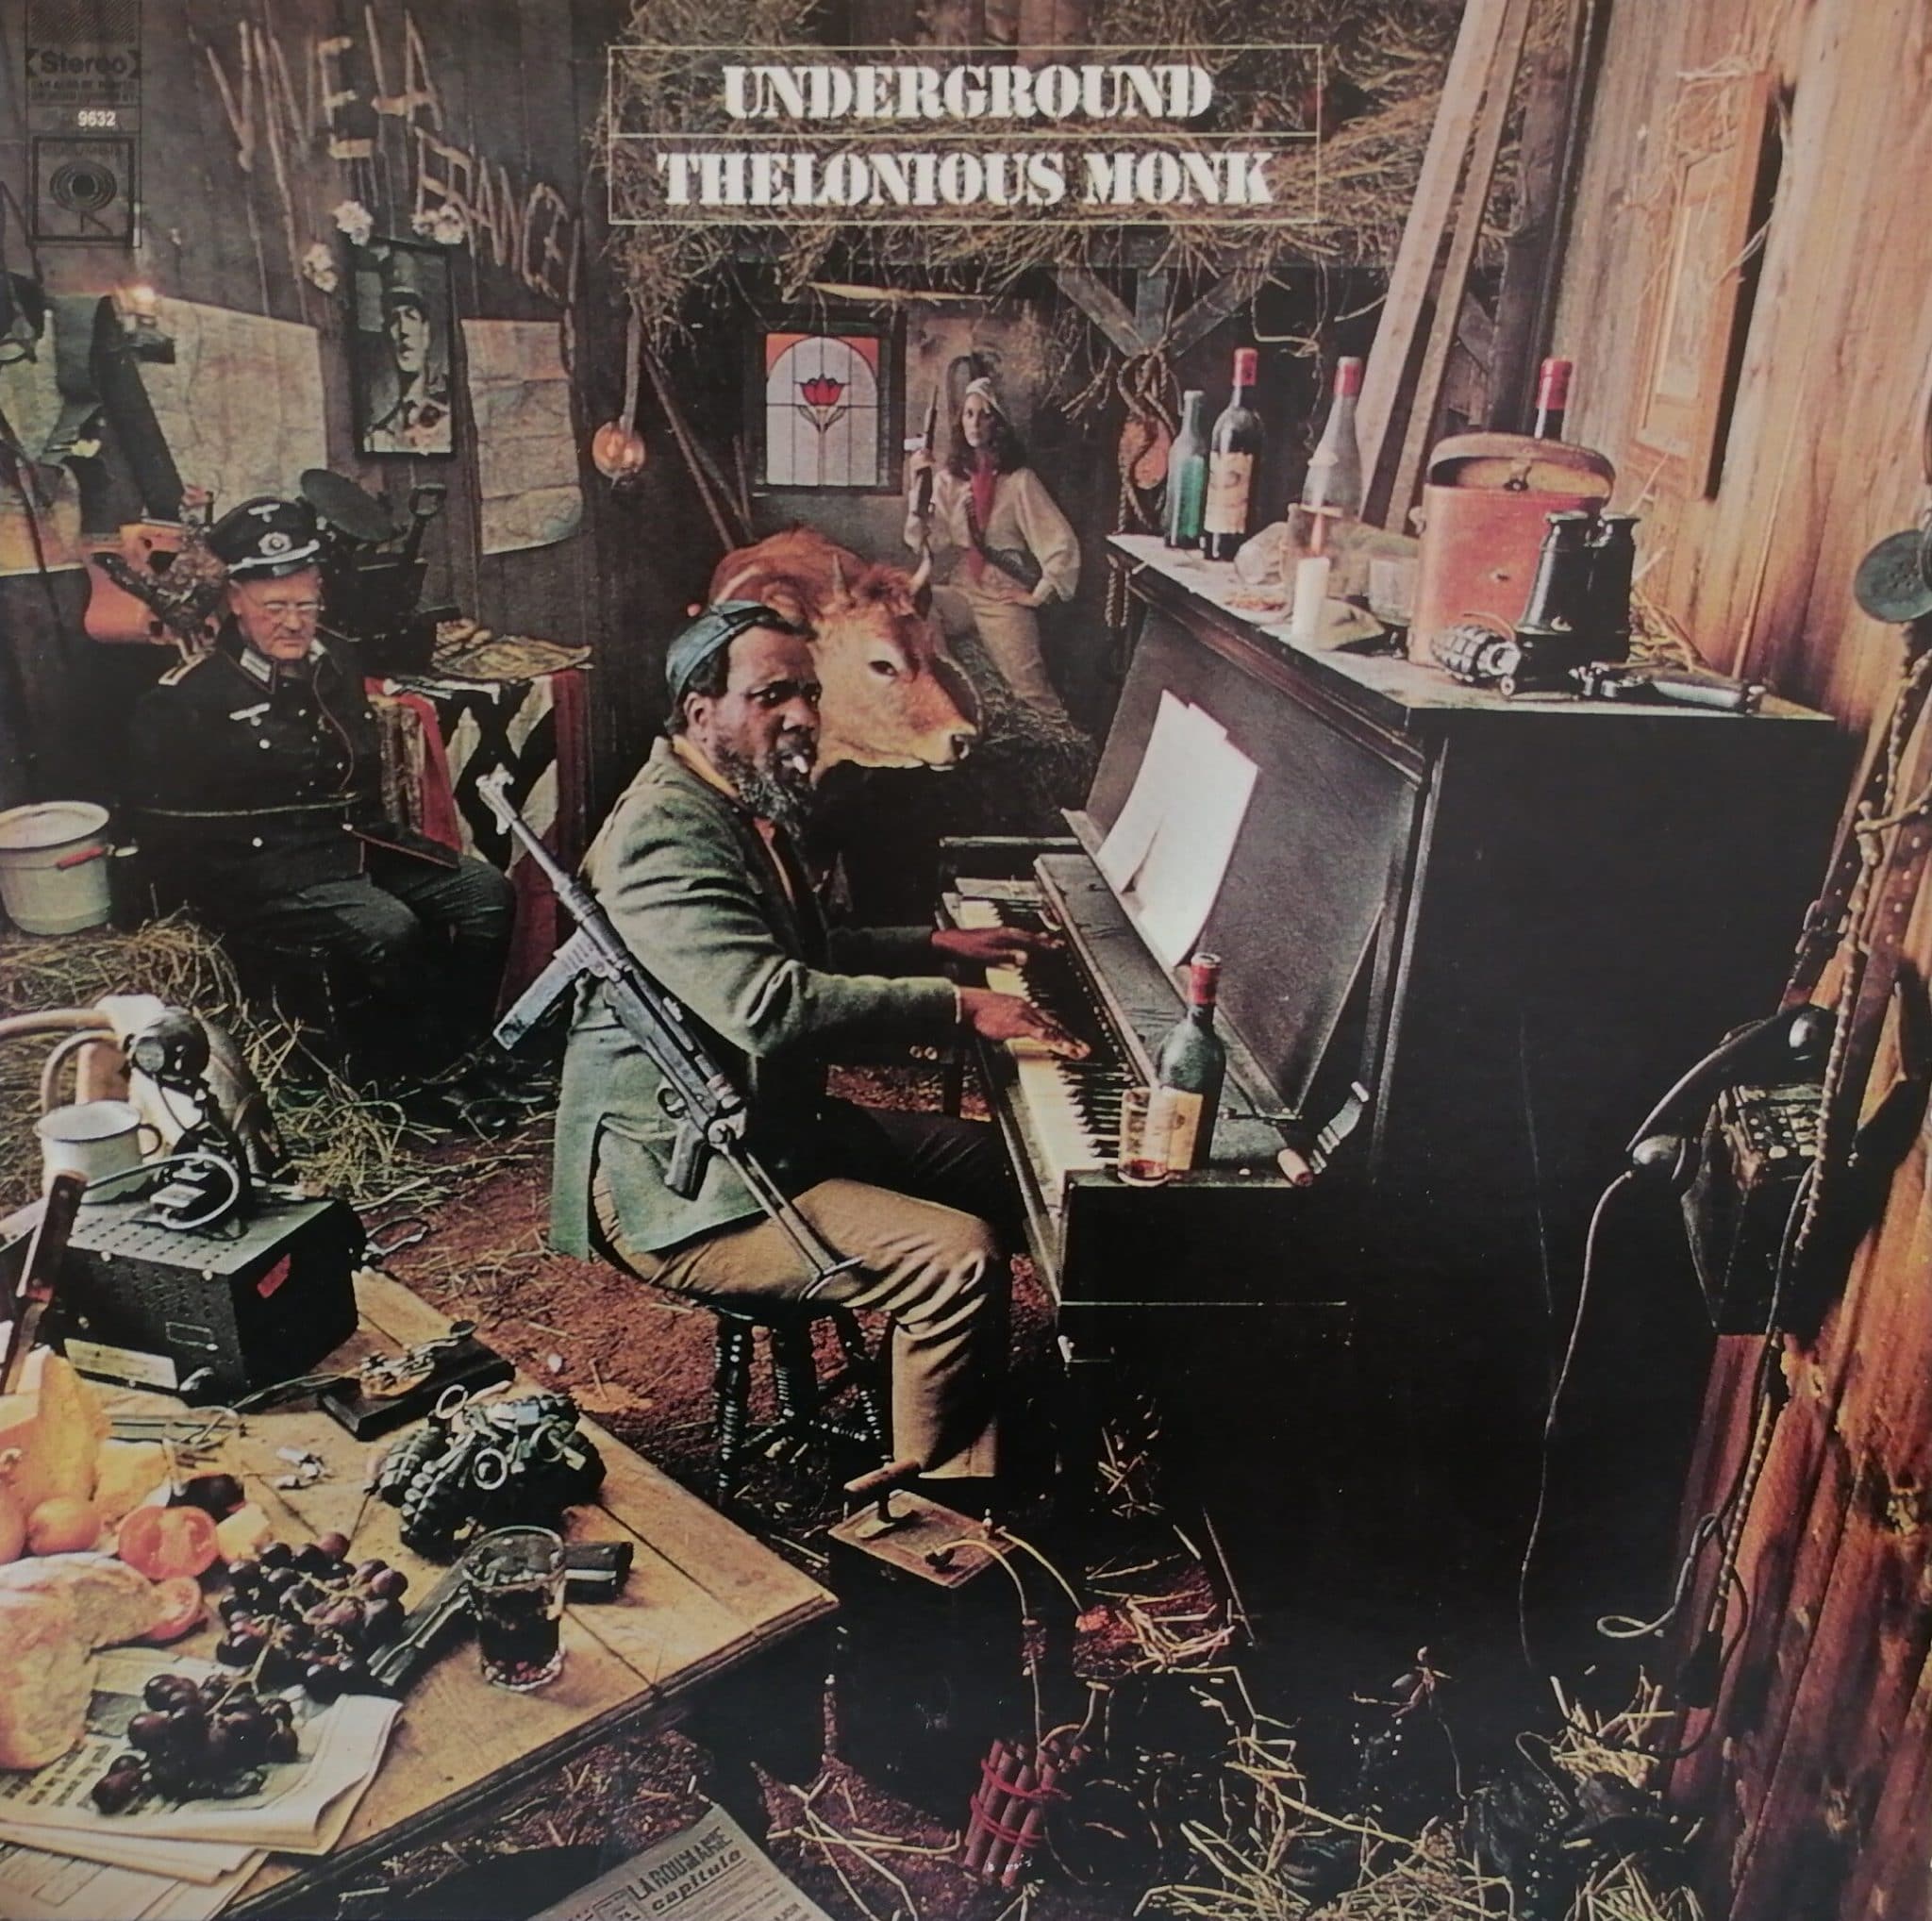 Gramofonska ploča Thelonious Monk Underground PC 9632